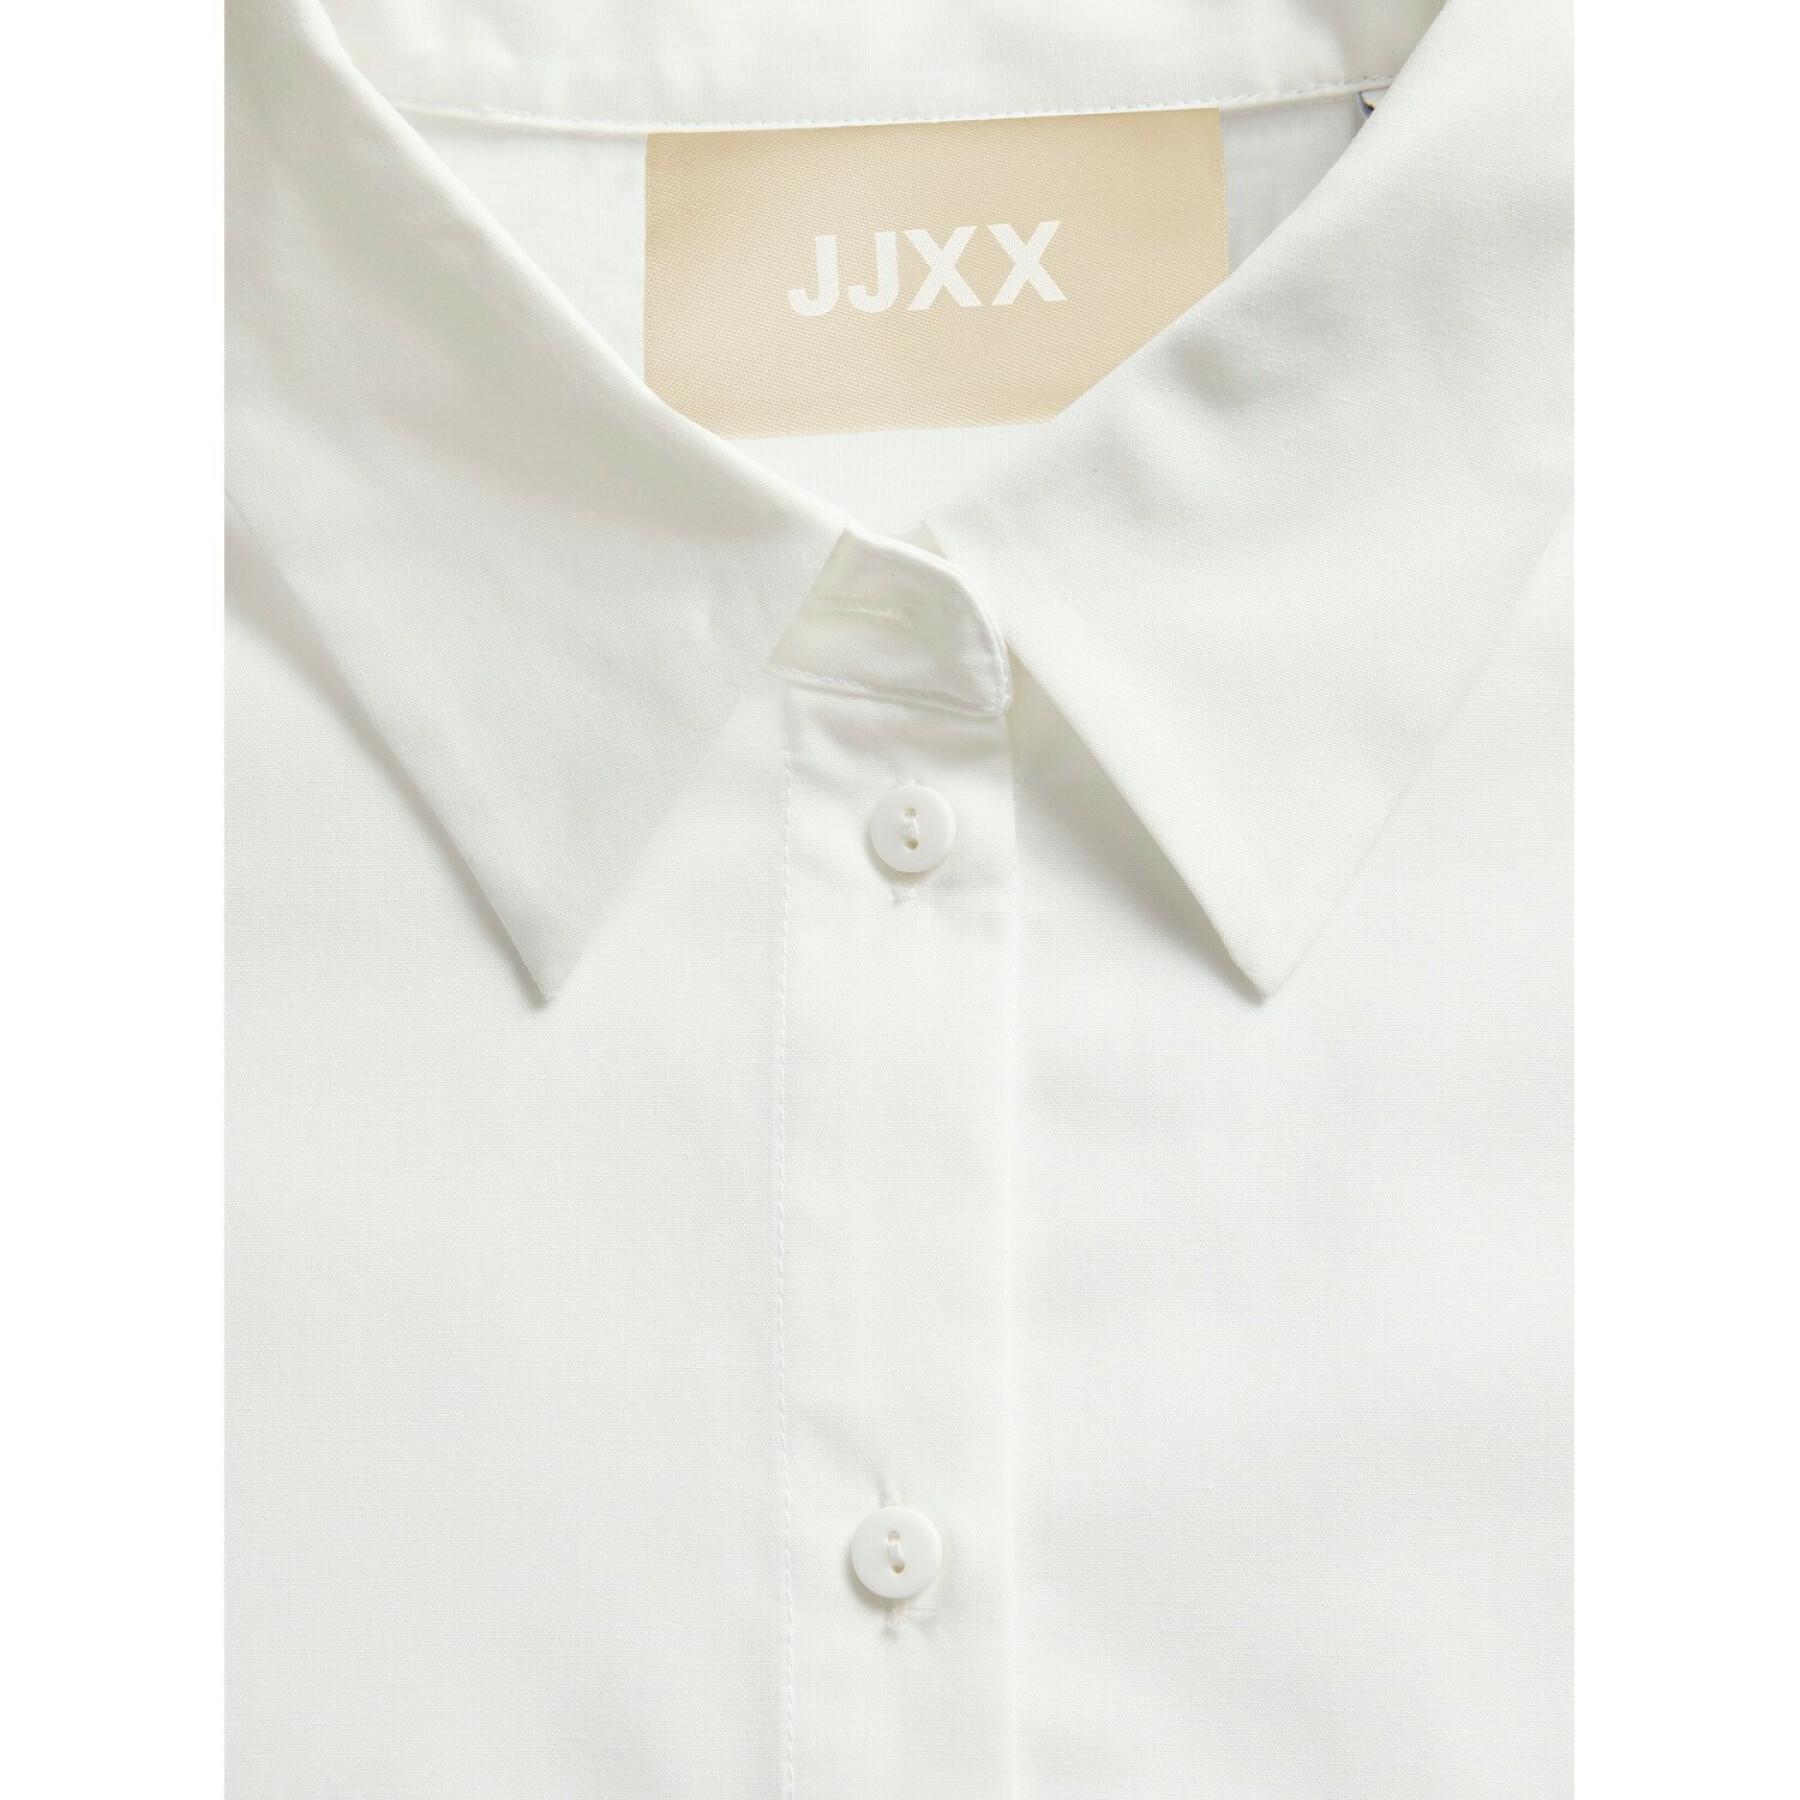 Camisa oversize JJXX mission